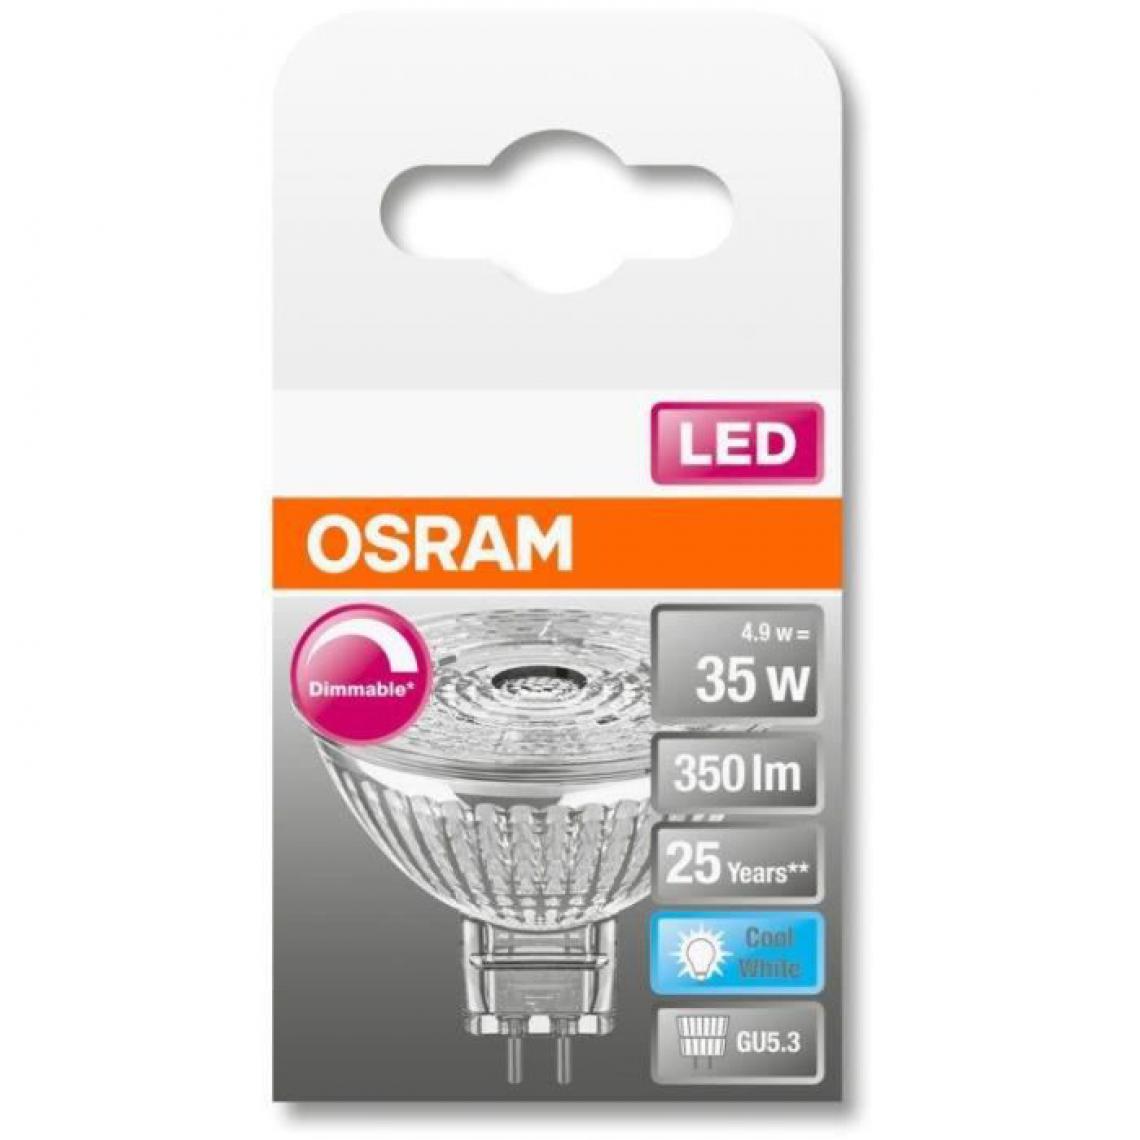 Osram - Spot MR16 LED 36° verre variable 4.9W - Ampoules LED